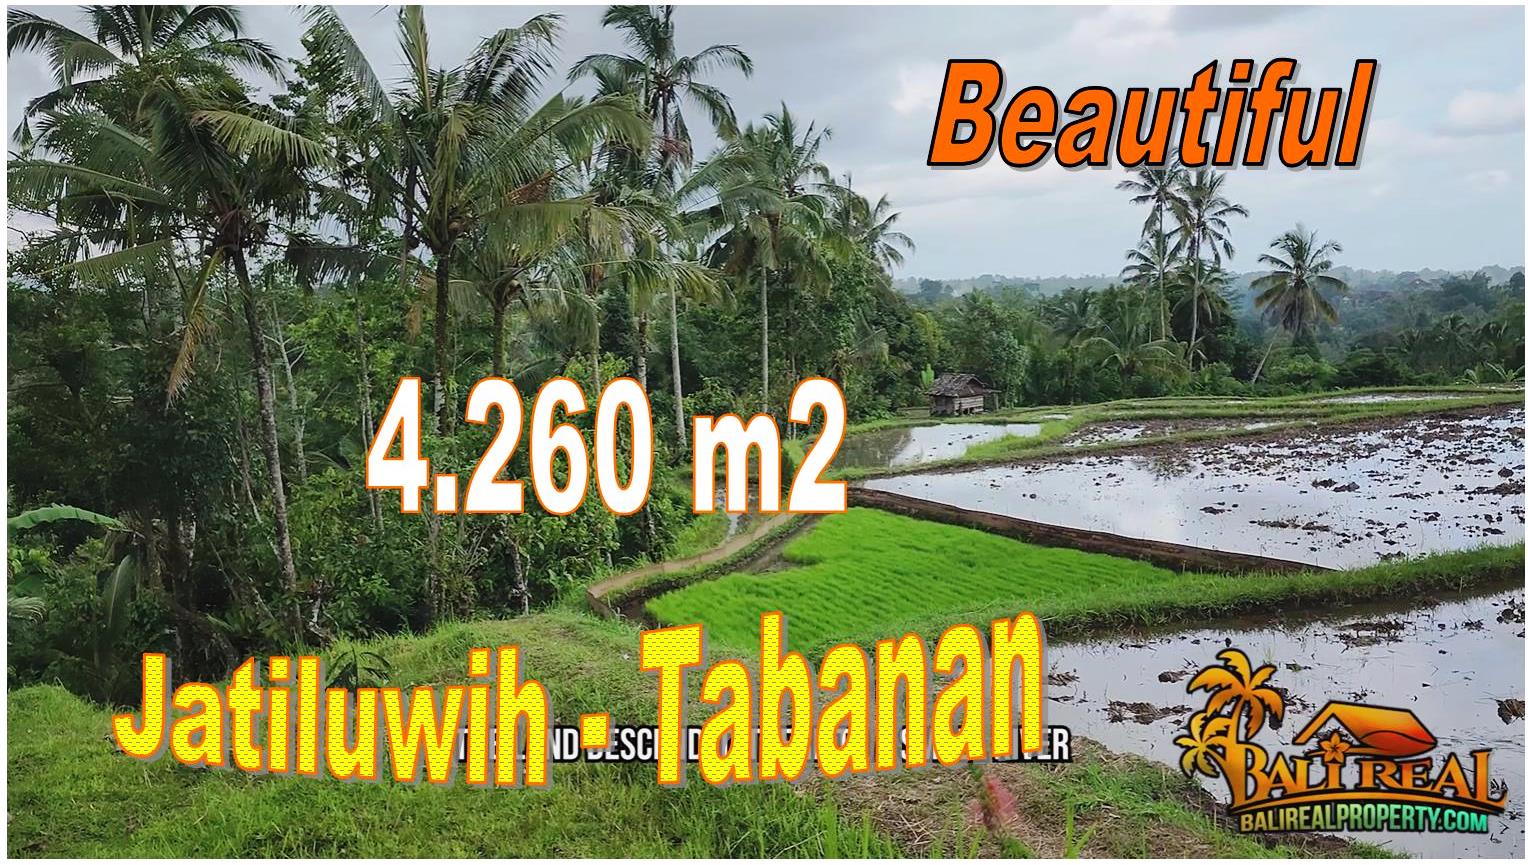 4,260 m2 LAND FOR SALE IN Penebel Tabanan BALI TJTB706